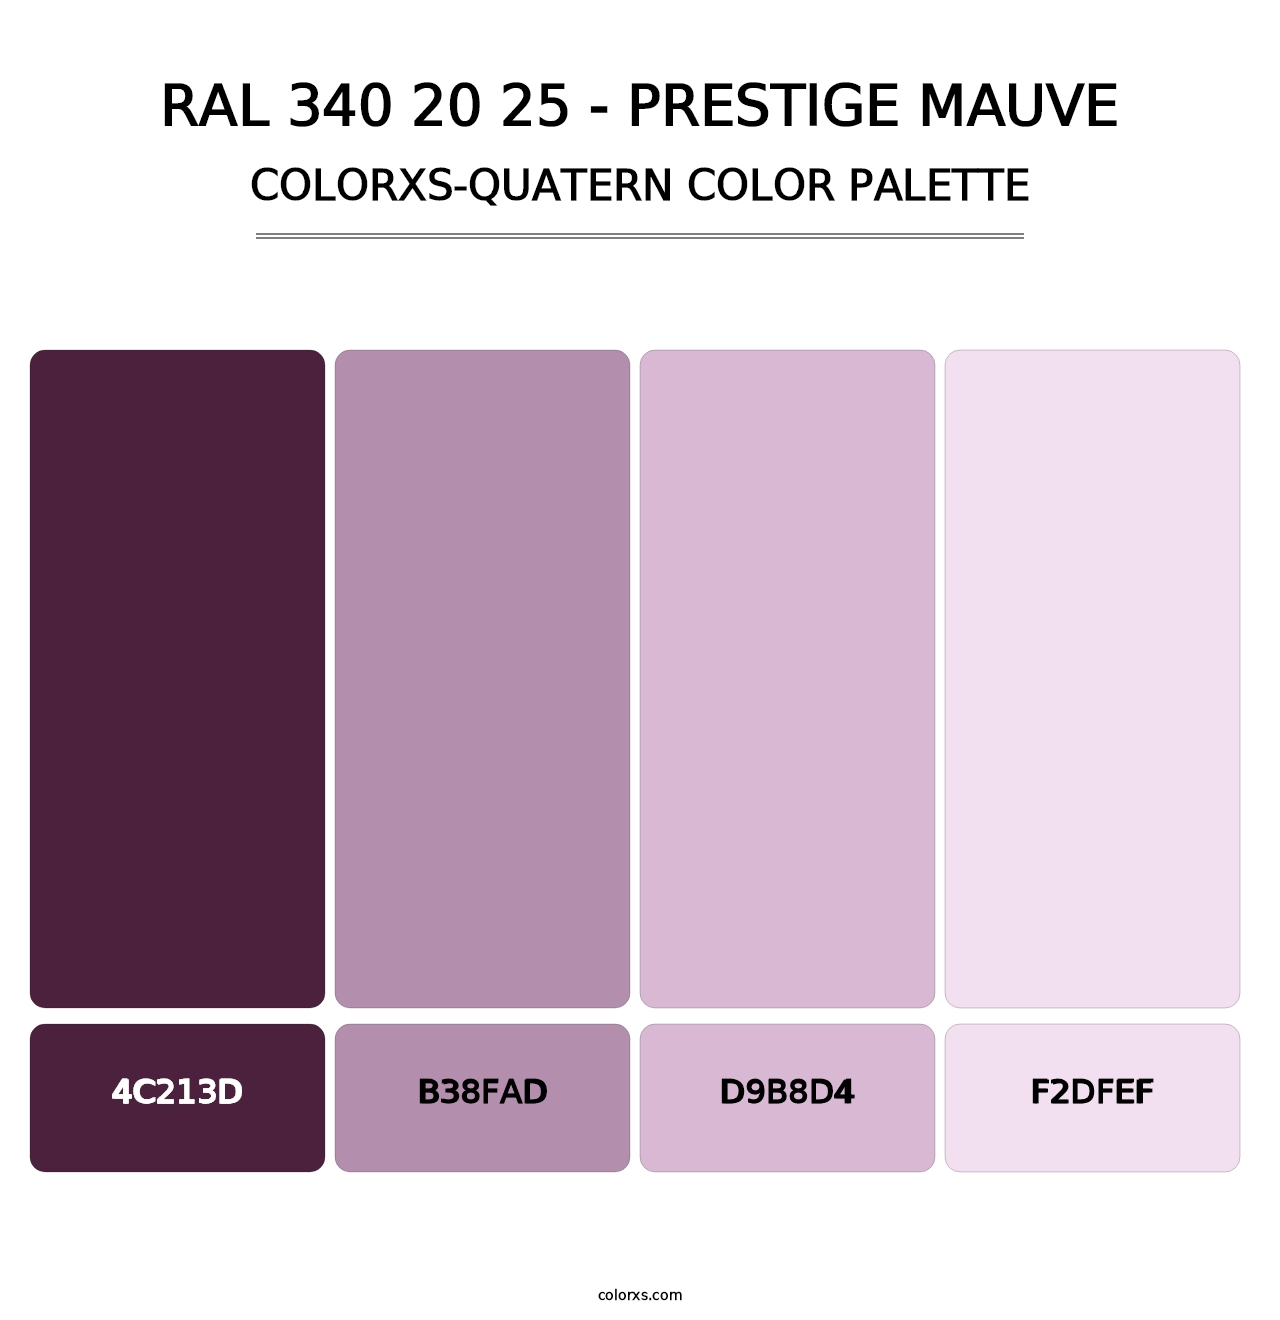 RAL 340 20 25 - Prestige Mauve - Colorxs Quatern Palette